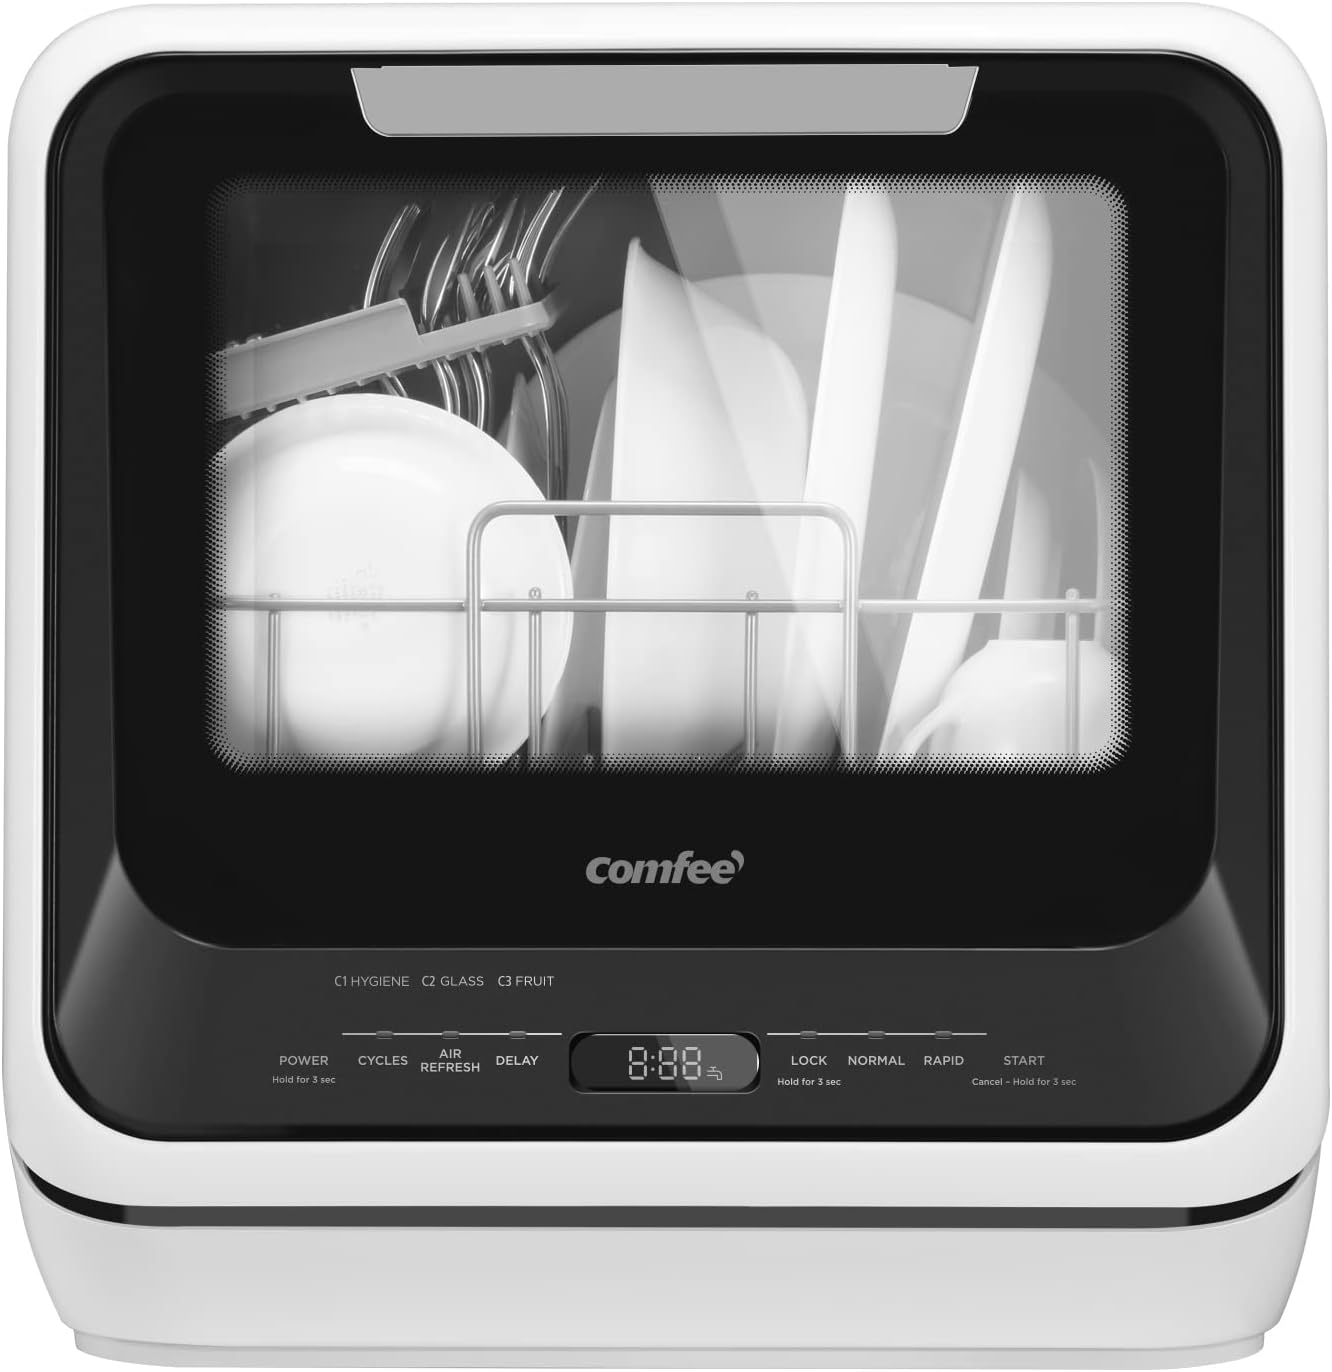 COMFEE' Portable Dishwasher Countertop, Mini [...]